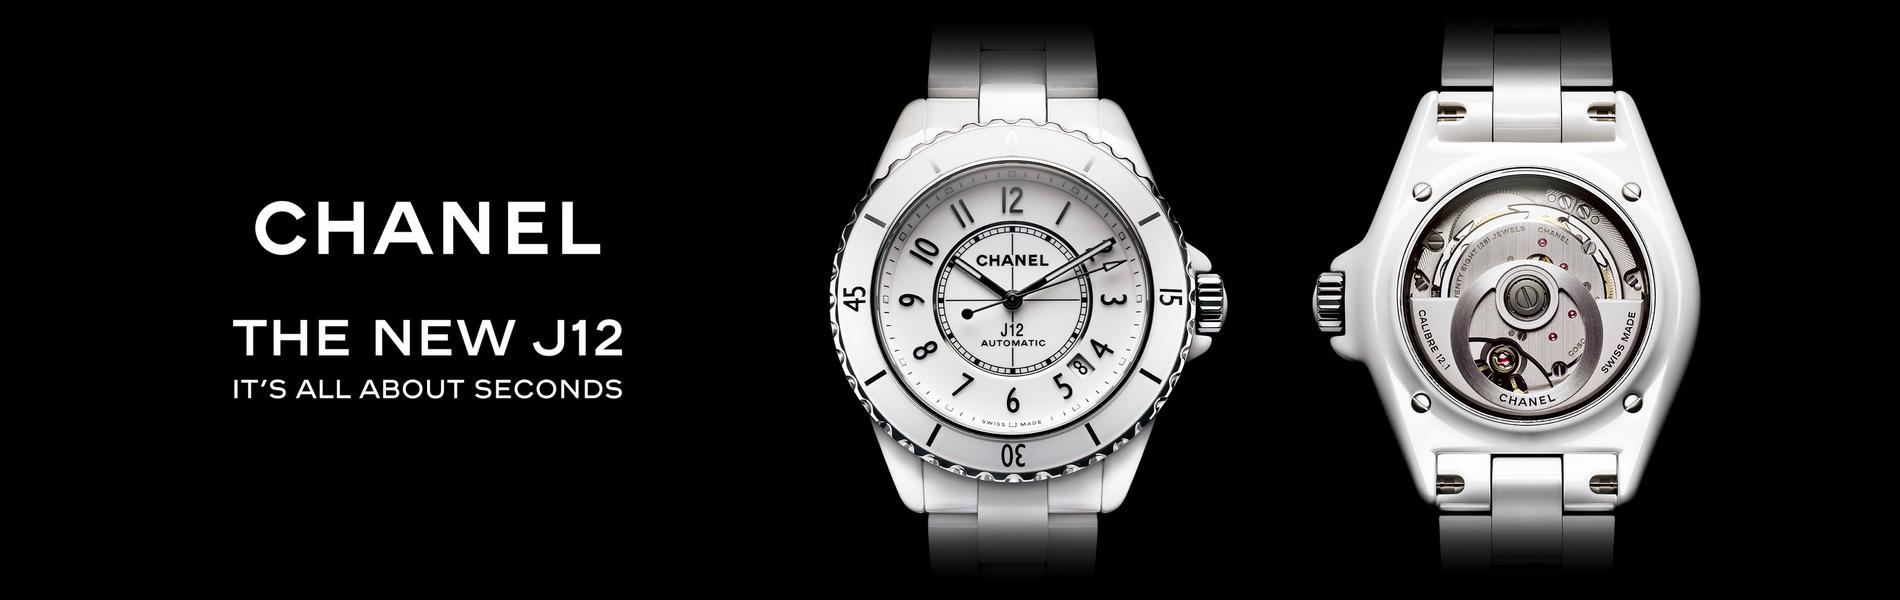 Chanel New J12 Watch